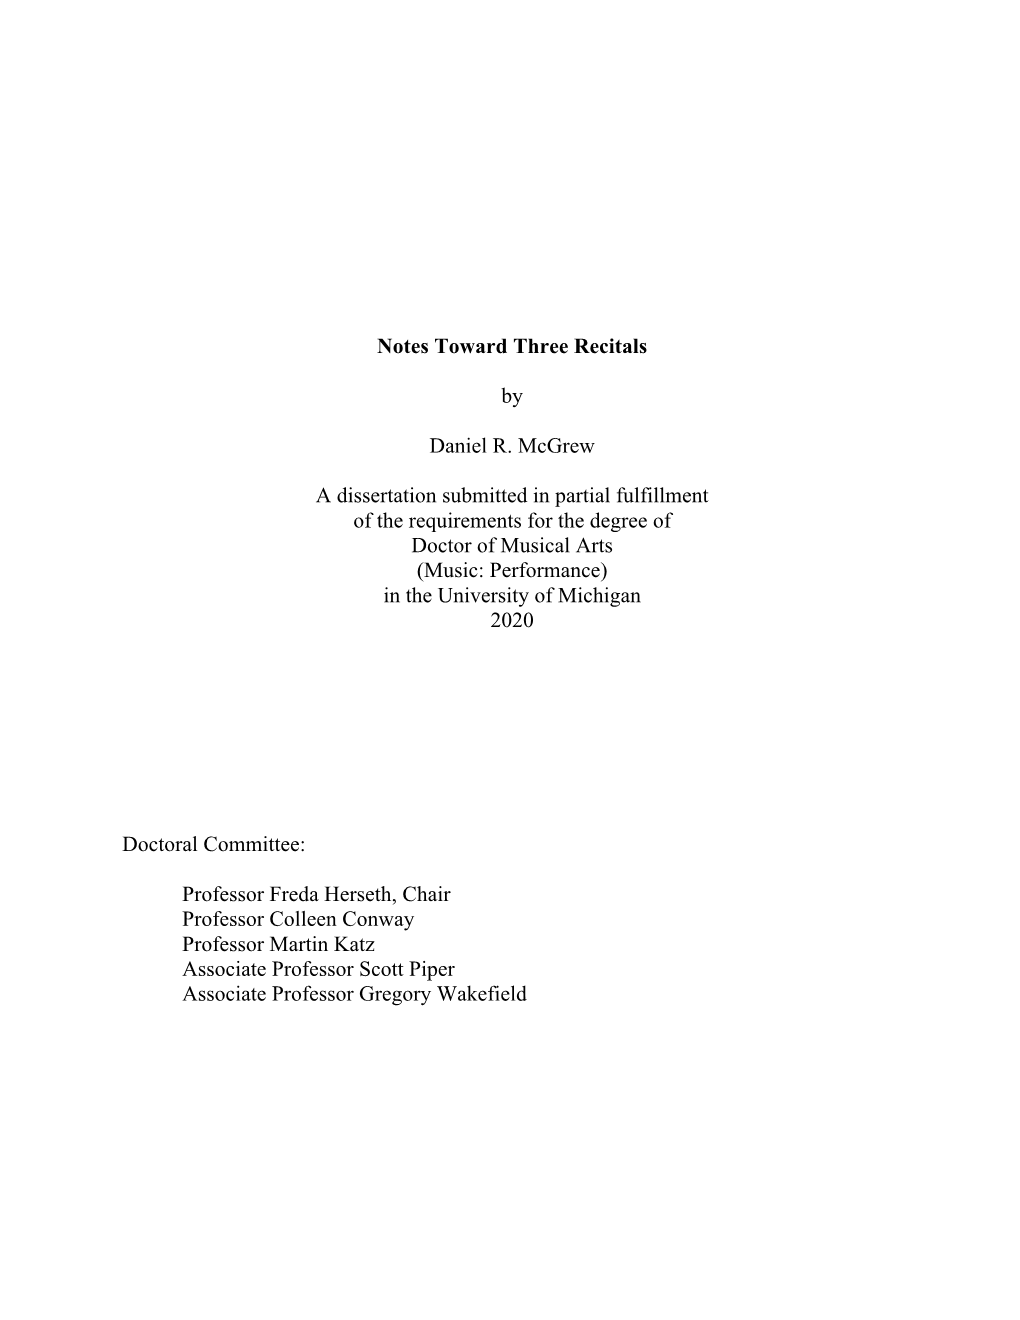 Notes Toward Three Recitals by Daniel R. Mcgrew a Dissertation